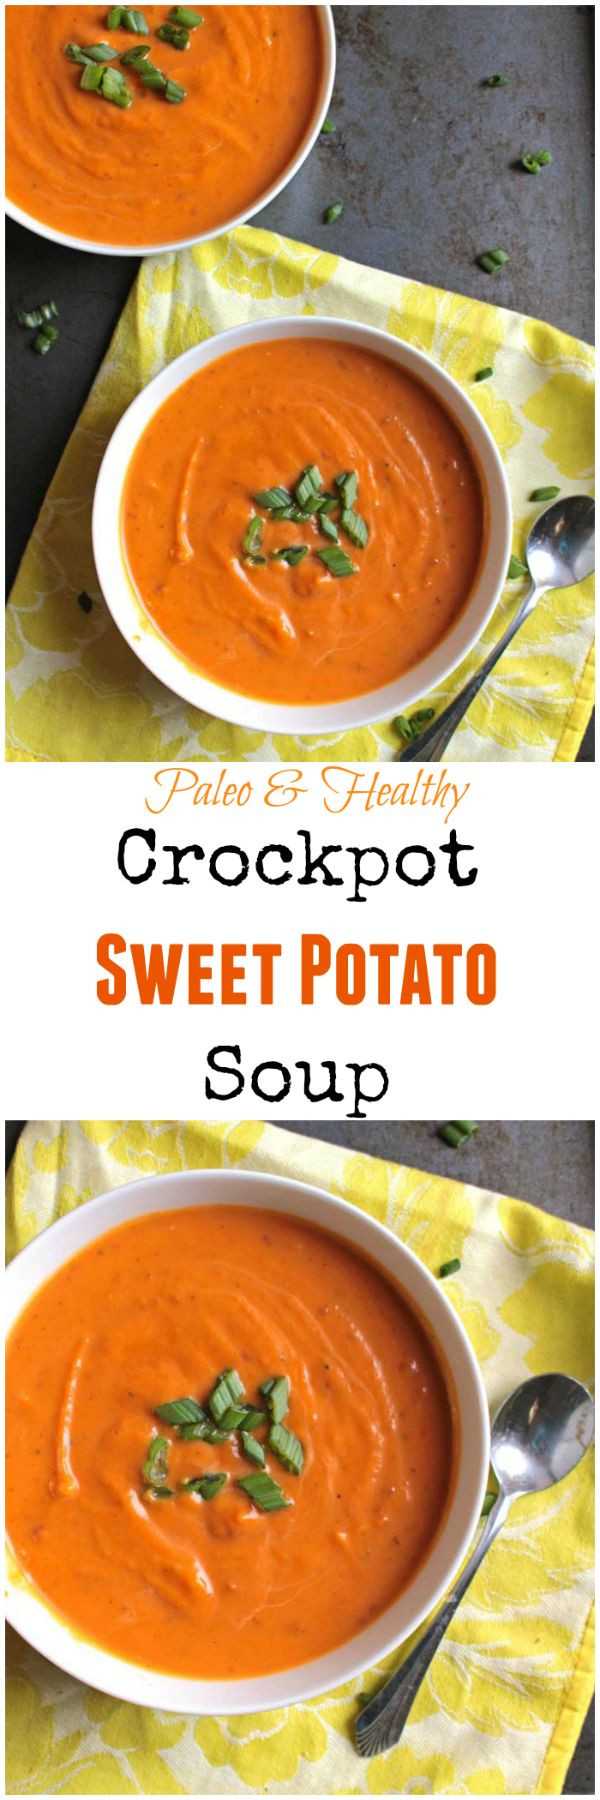 Sweet Potato Soup Paleo
 Paleo Crockpot Sweet Potato Soup